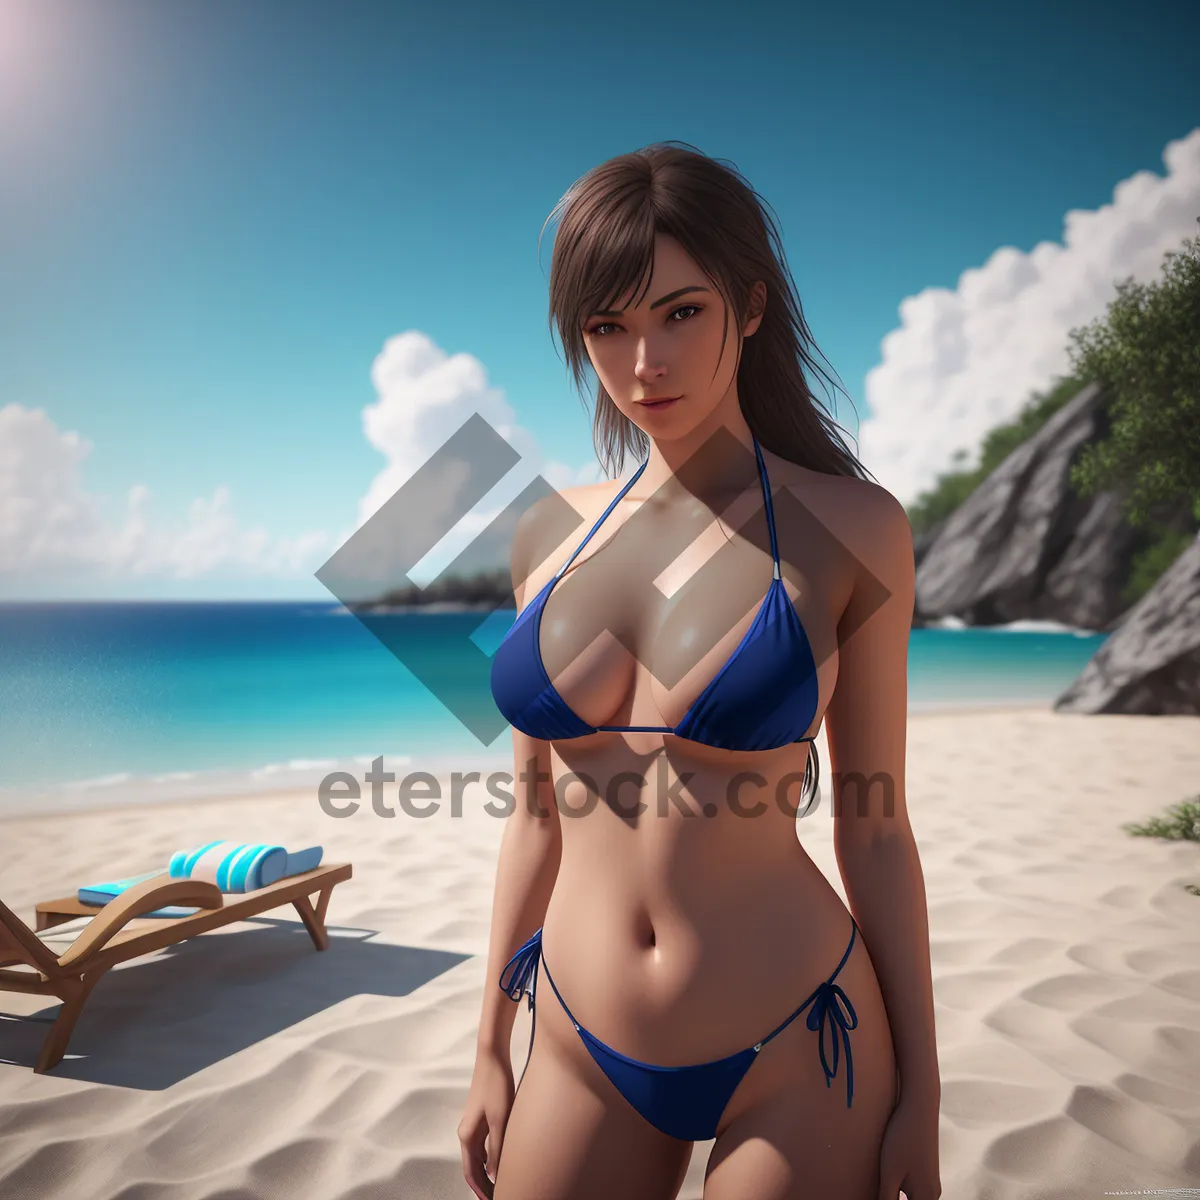 Picture of Beach Babe in Tropical-Print Bikini on Sand